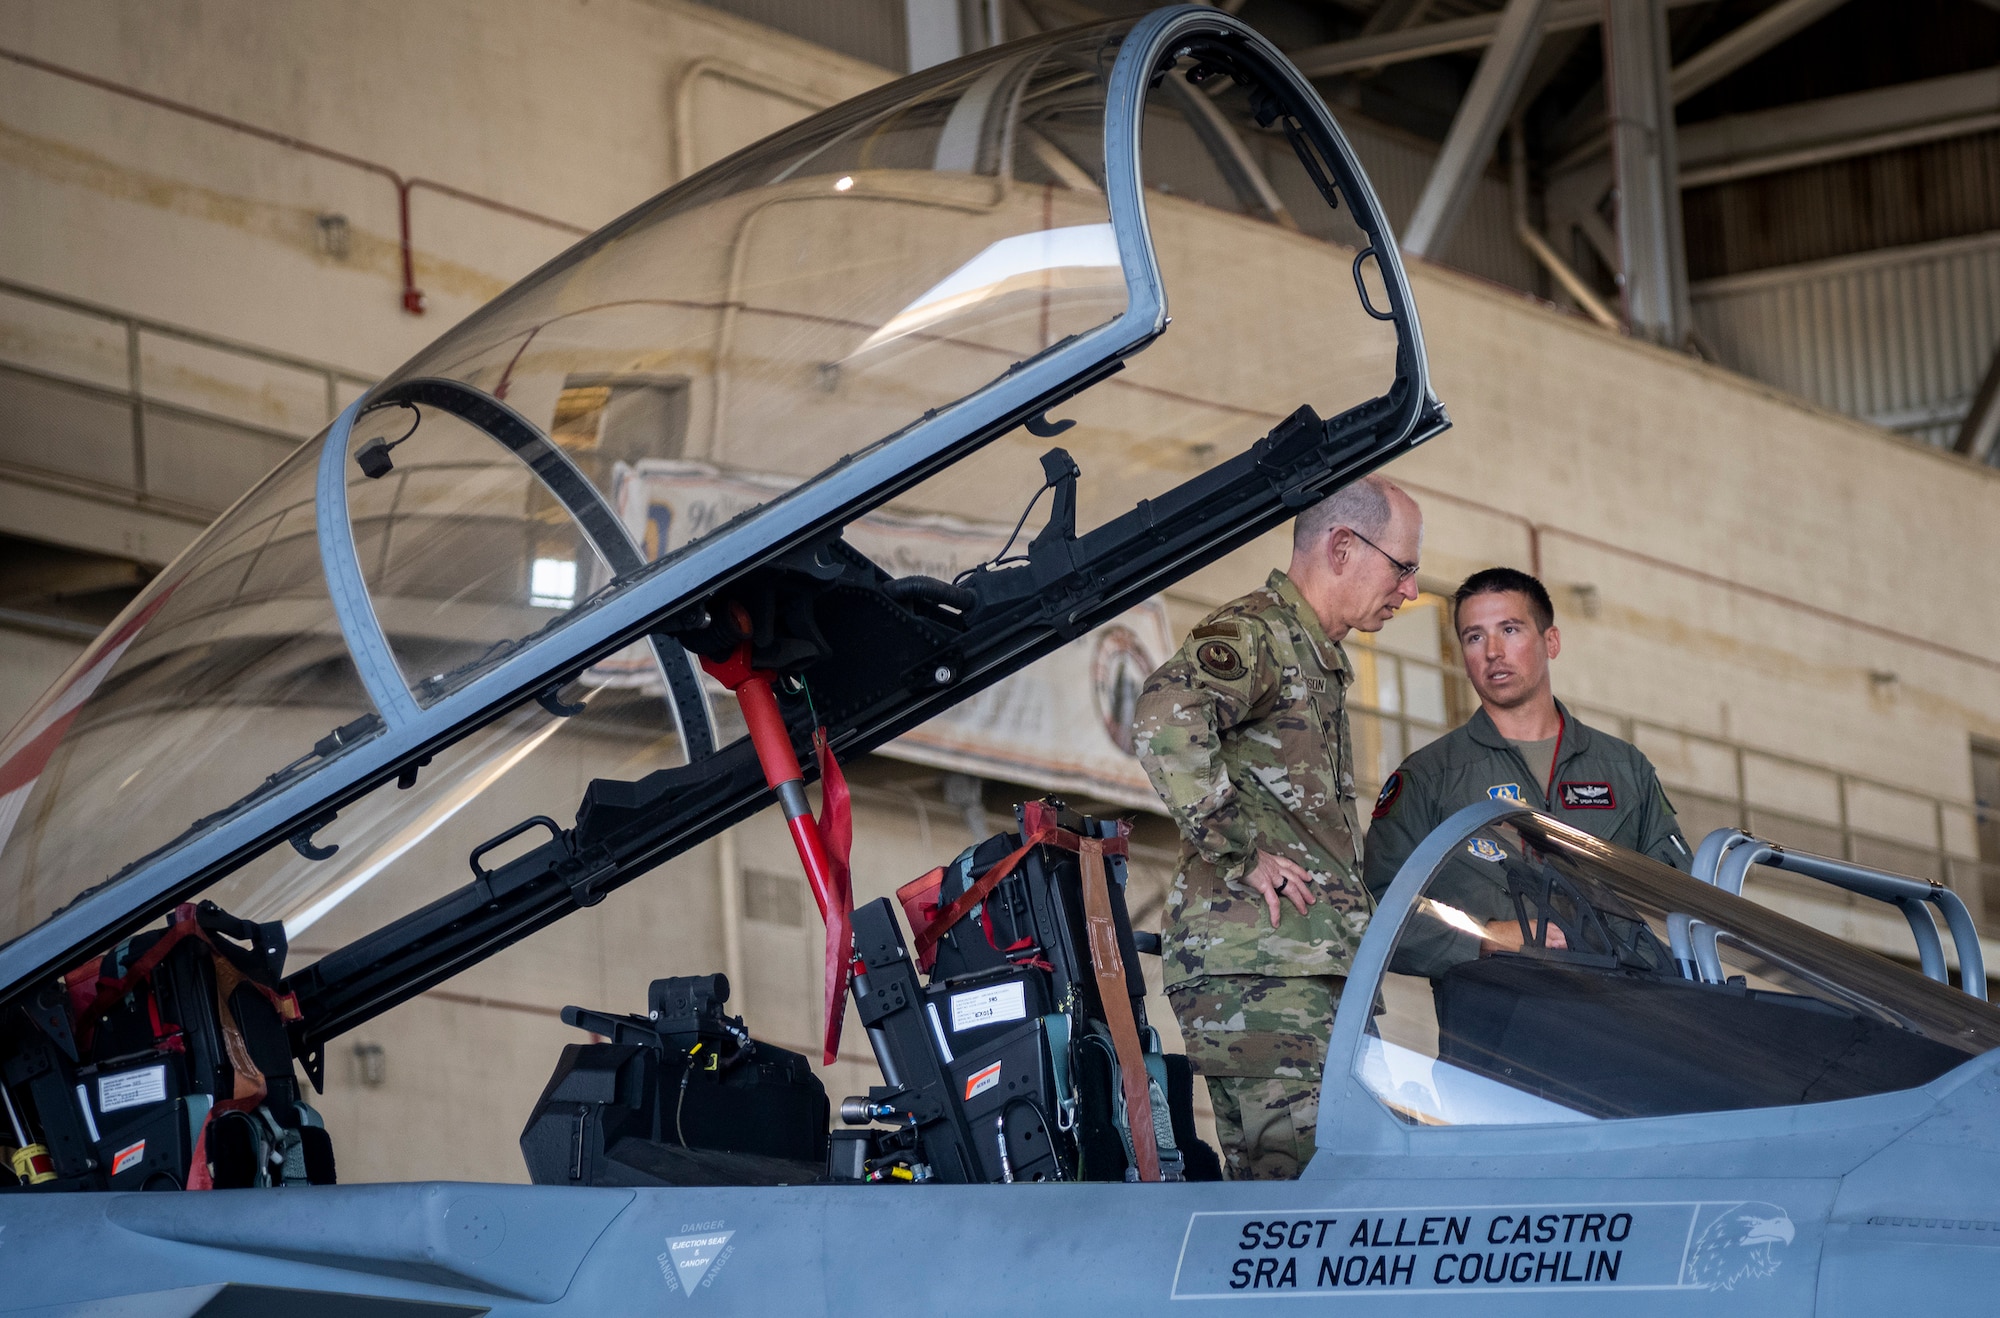 Afmc Leadership Visits Eglin Air Force Materiel Command Article Display